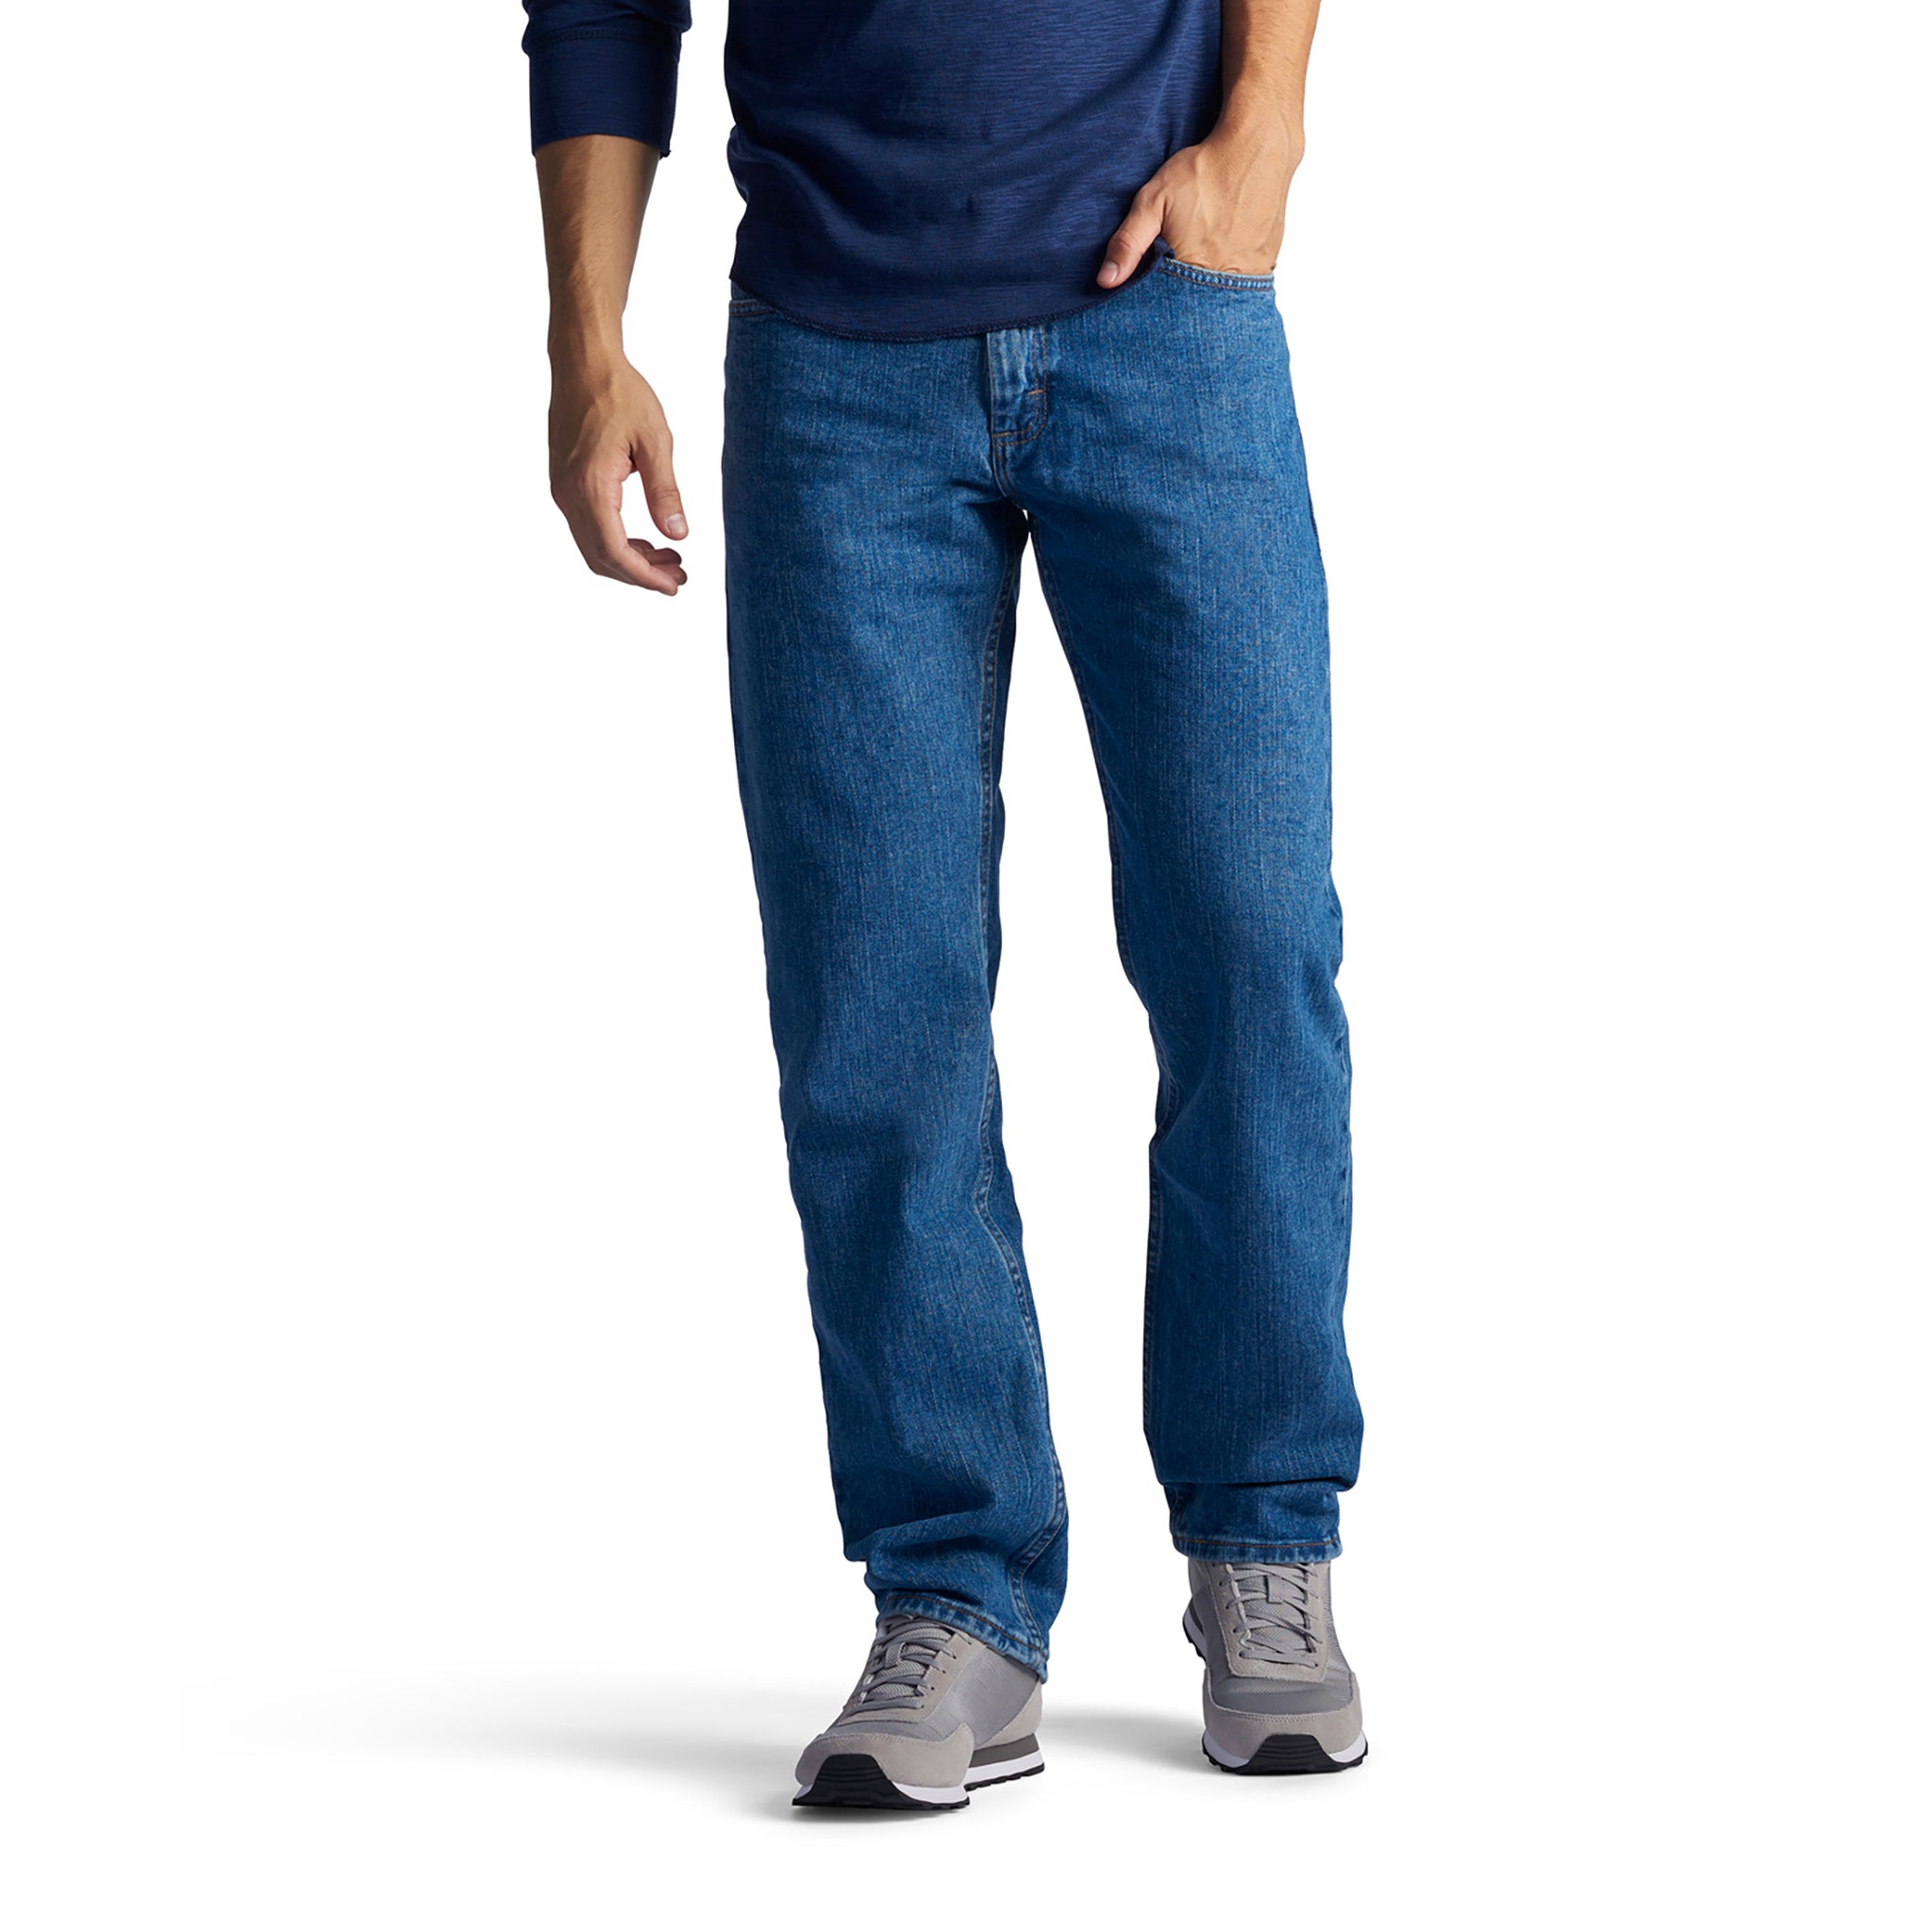 WRANGLER & LEE Jeans for women and men wholesale